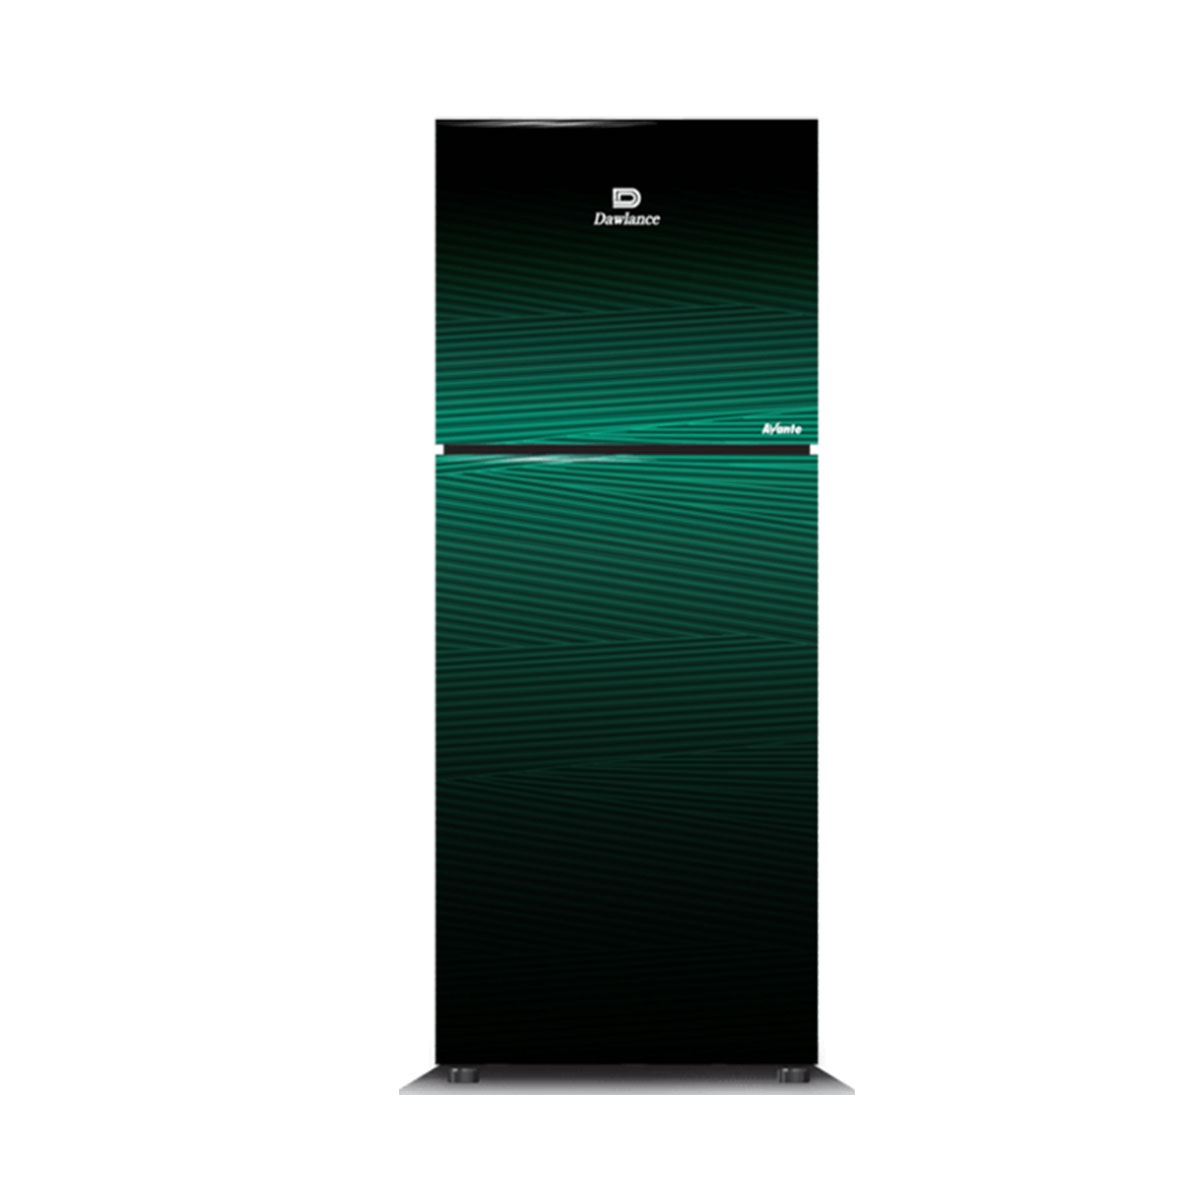 Dawlance Refrigerator 9178 Avante Noir Green